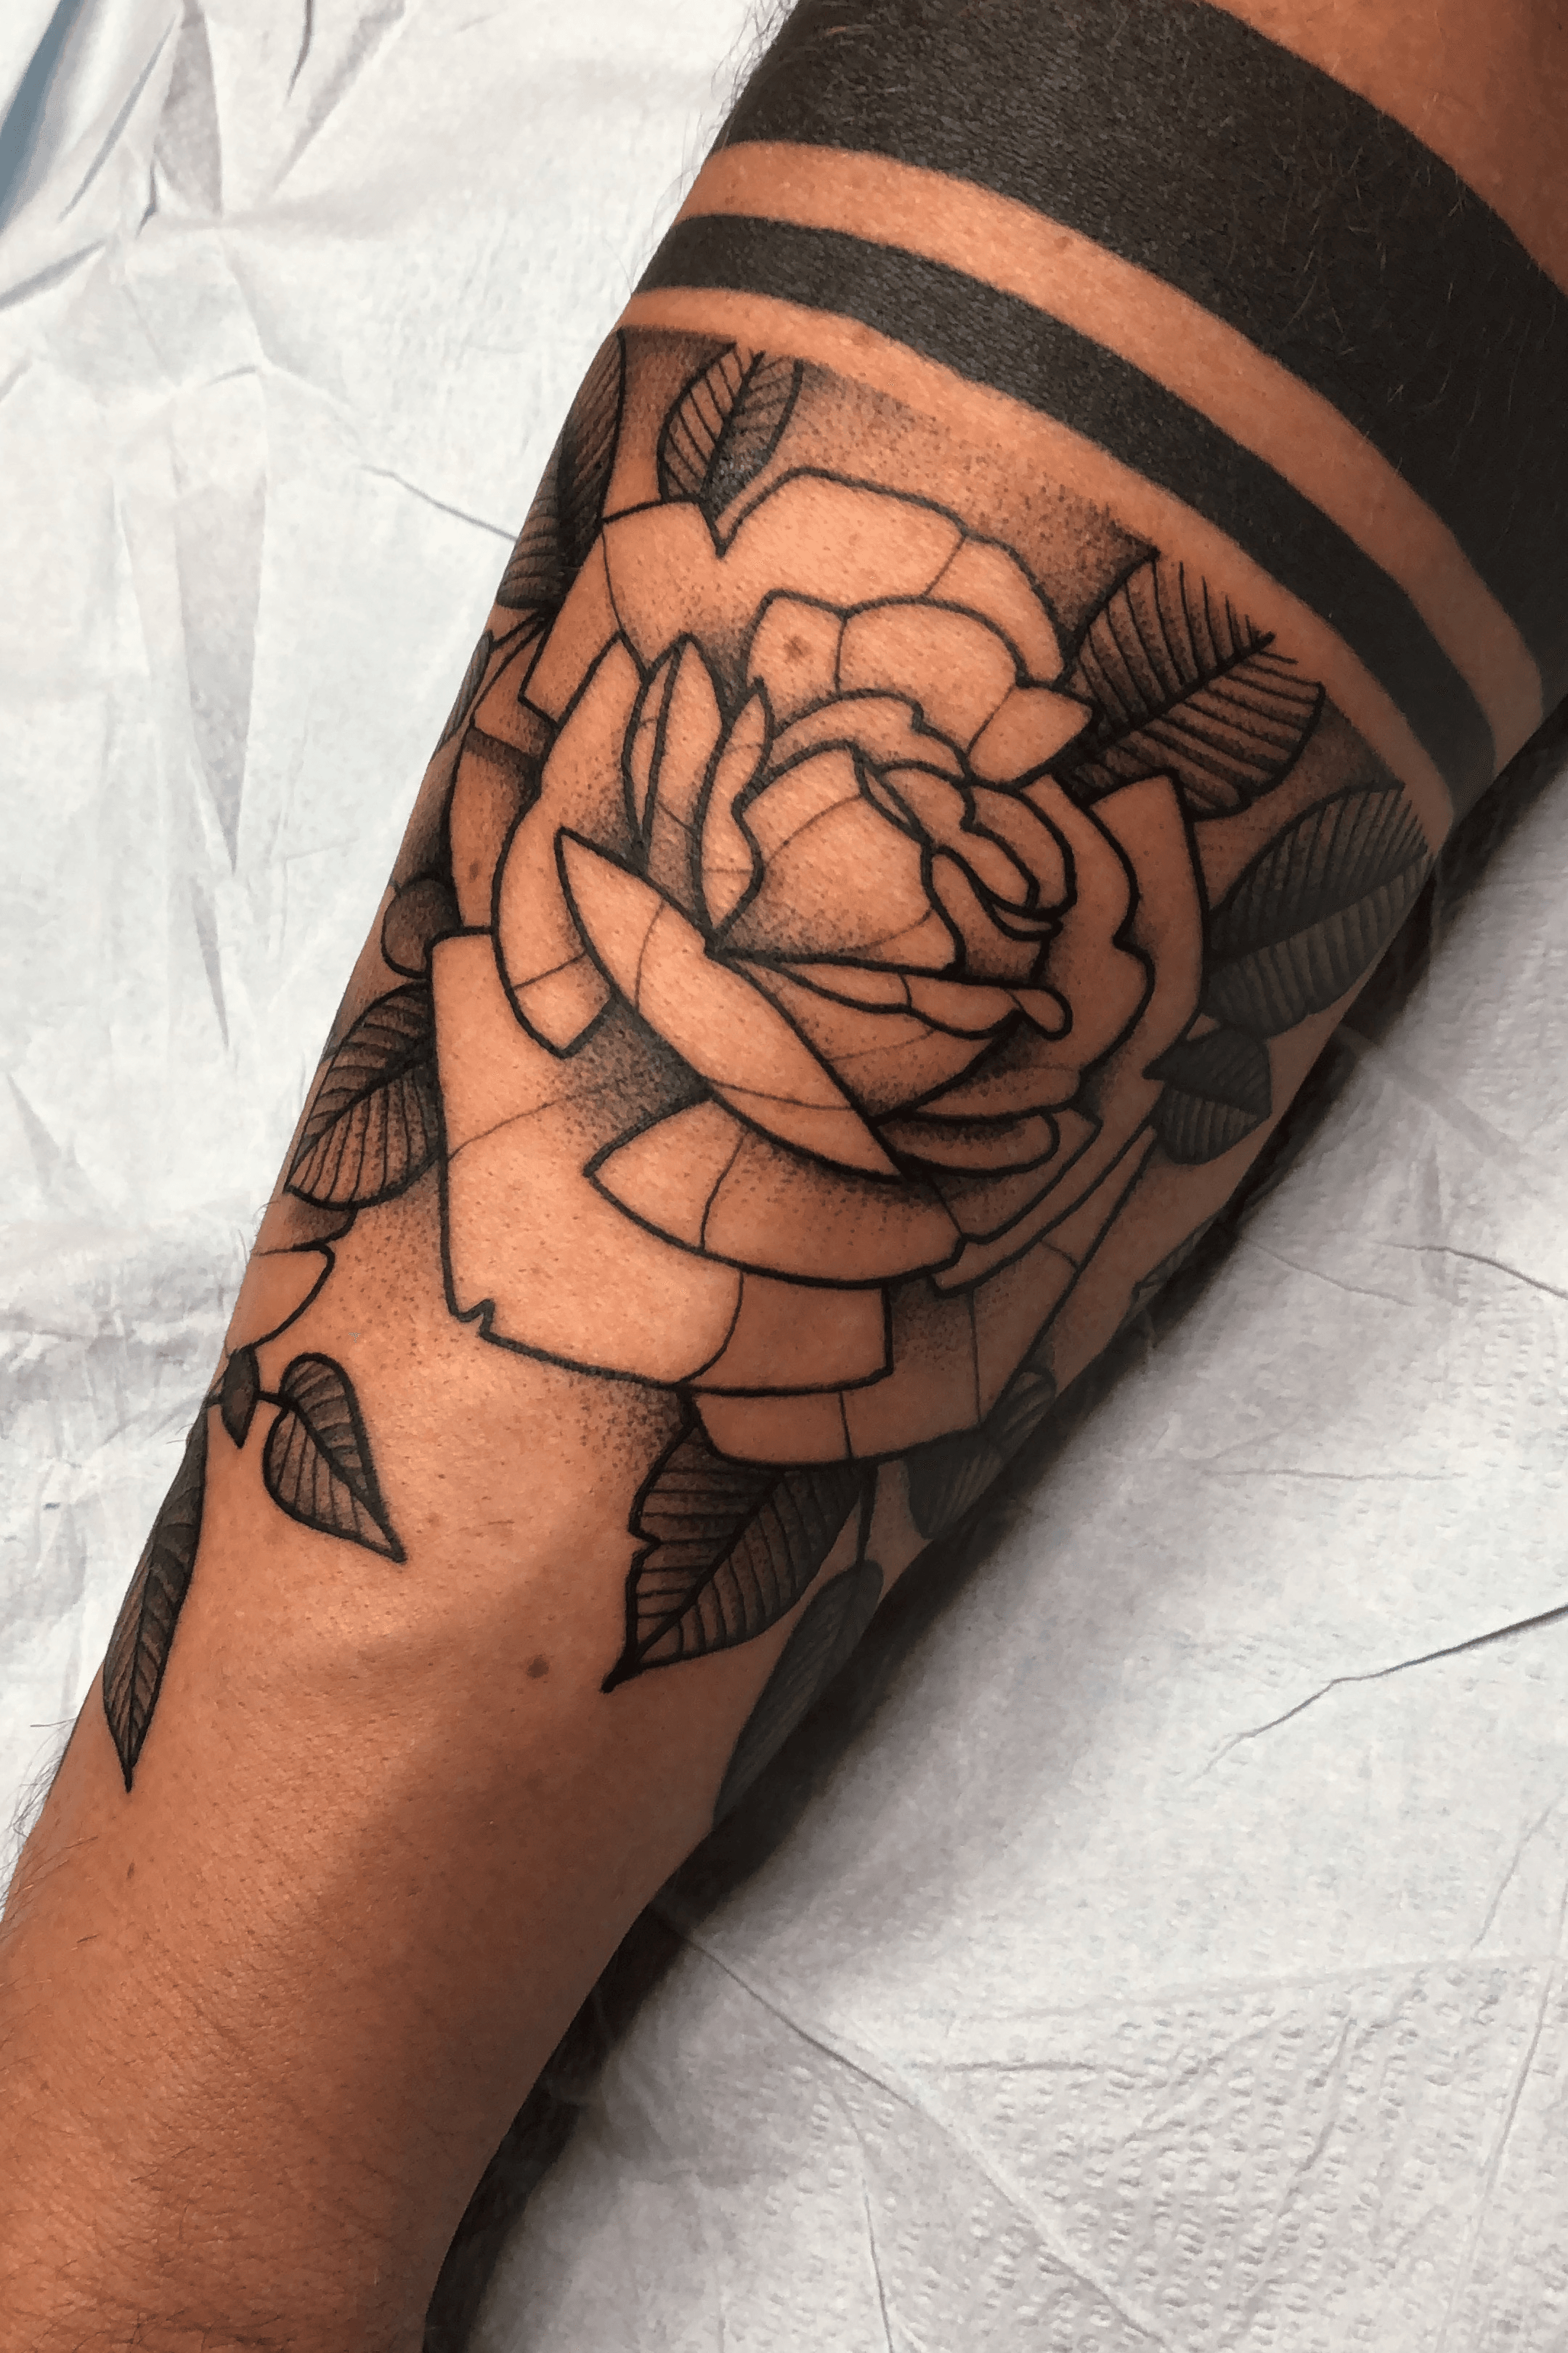 Roses and thorns armband Swipe for it healed Wild Paw Tattoo Singapore  sbhez on Instagram  rtattoo